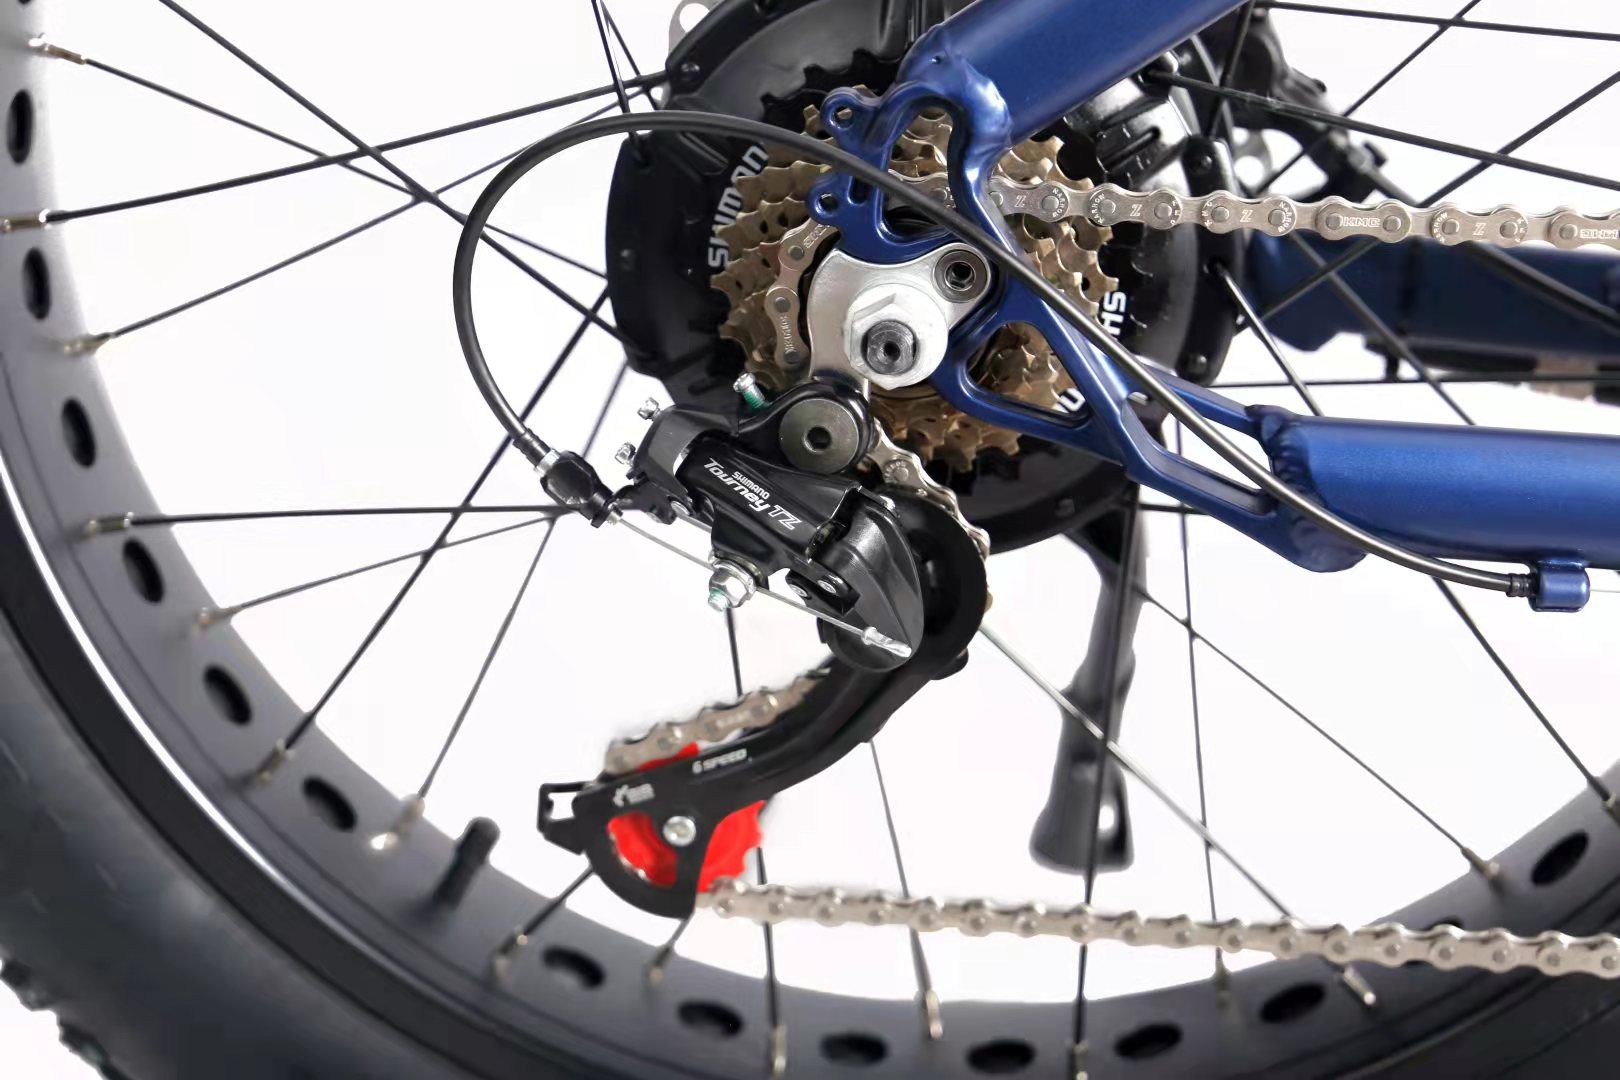 FANTAS CRUISER-mini bafang motor electric bicycle fat tire snow beach e-bike harley